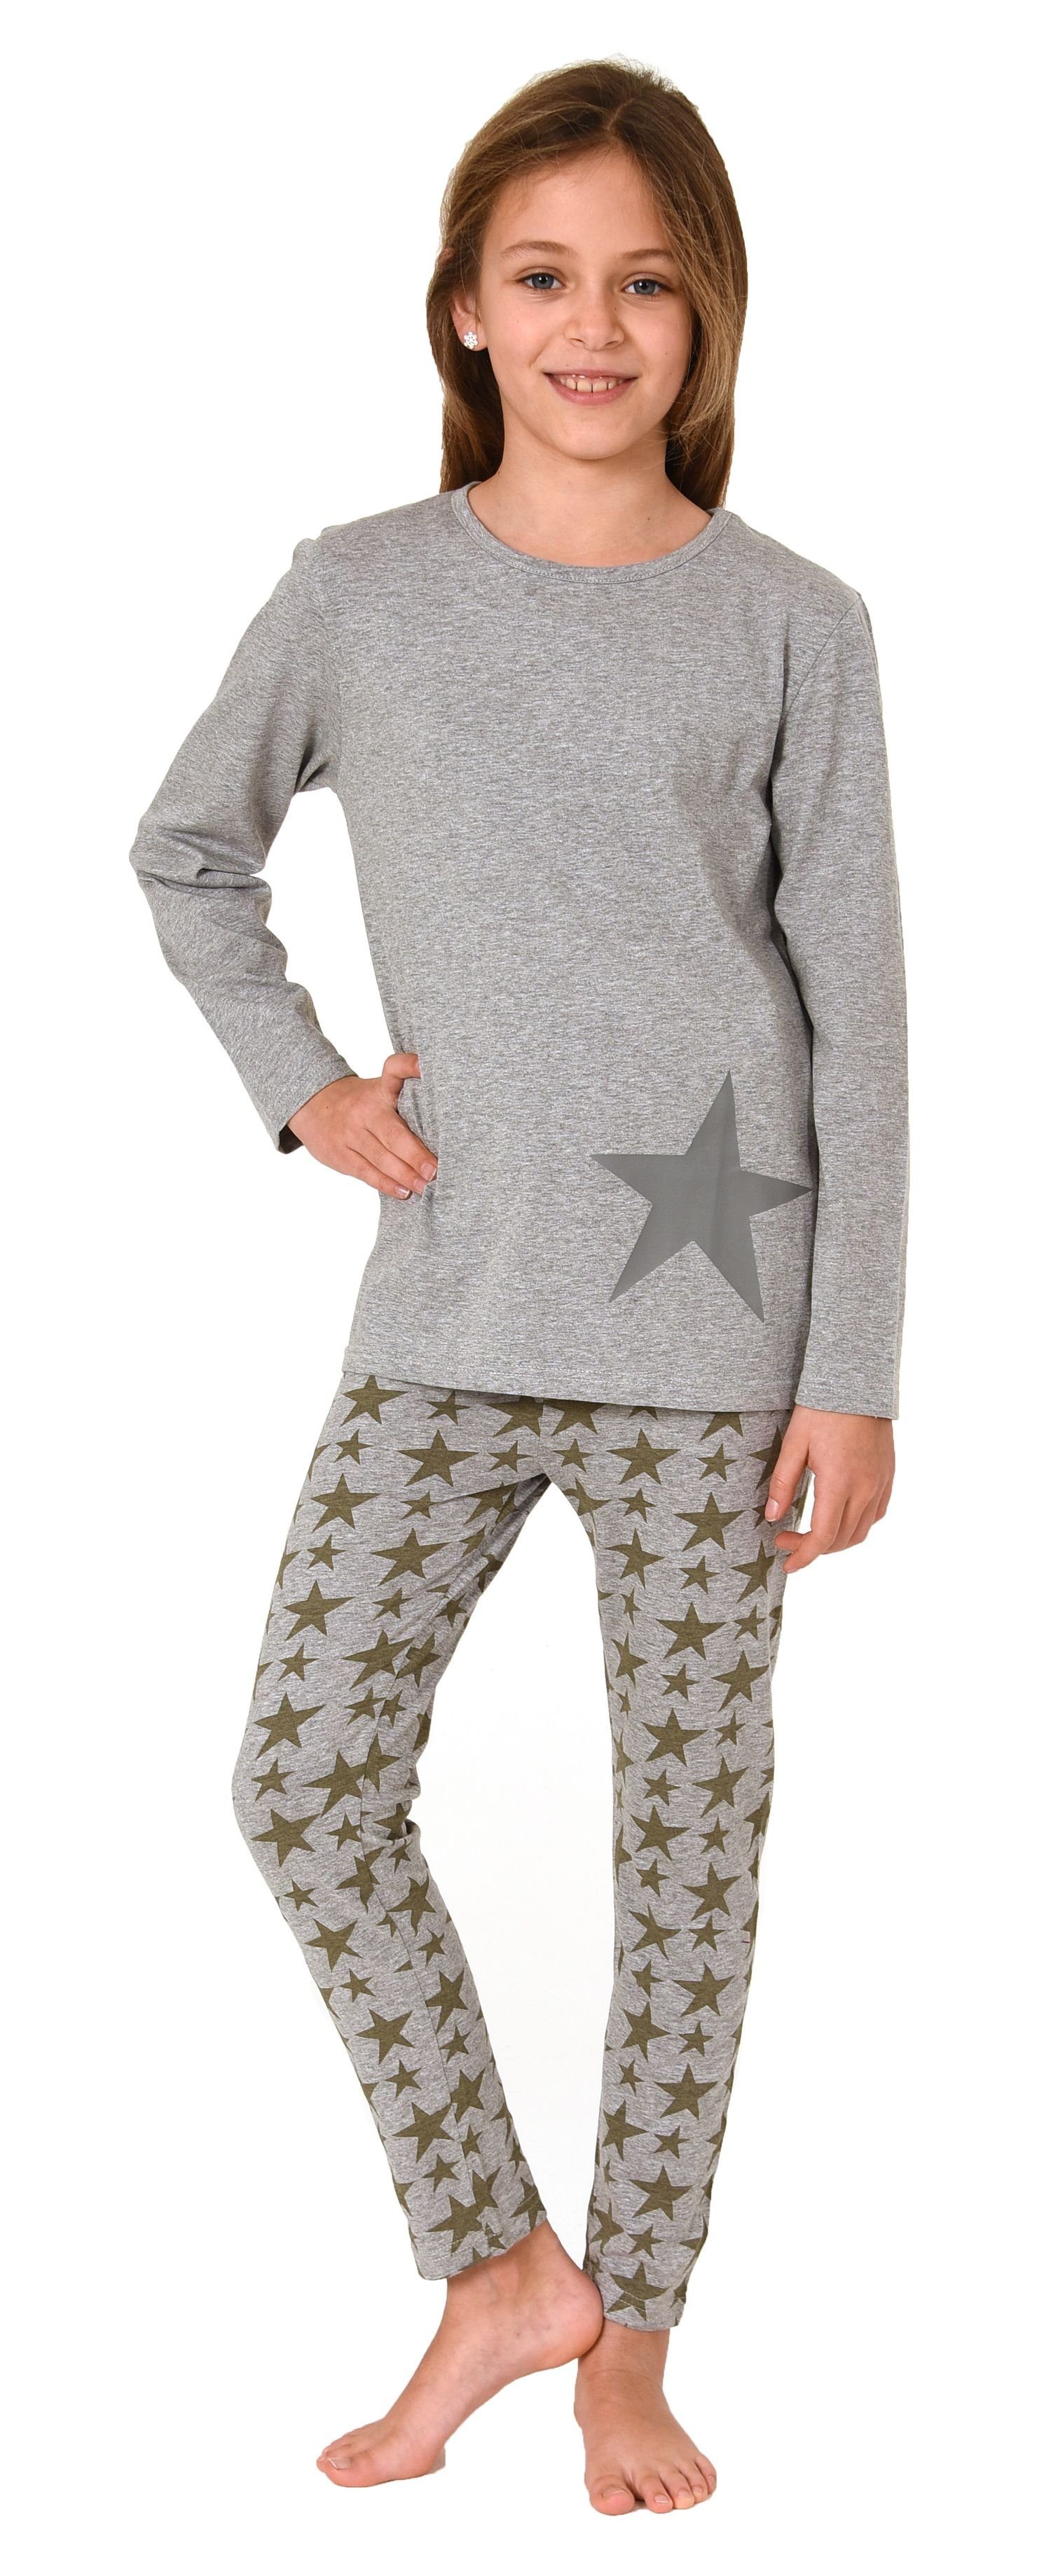 Pyjama Normann Mädchen Sterne-Optik in grau Pyjama Schöner langarm Schlafanzug